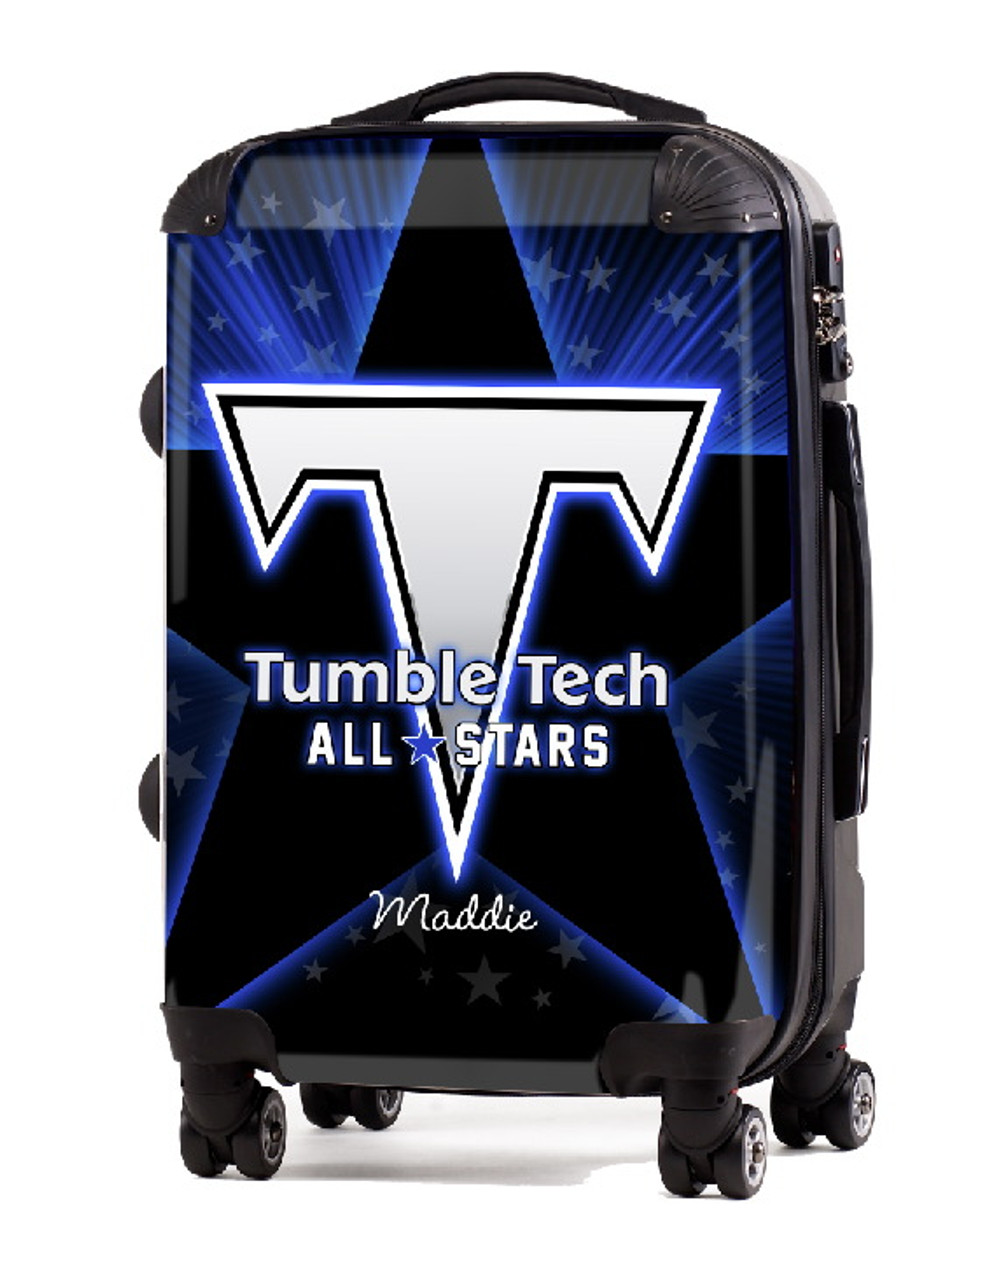 Tumble Tech All Stars